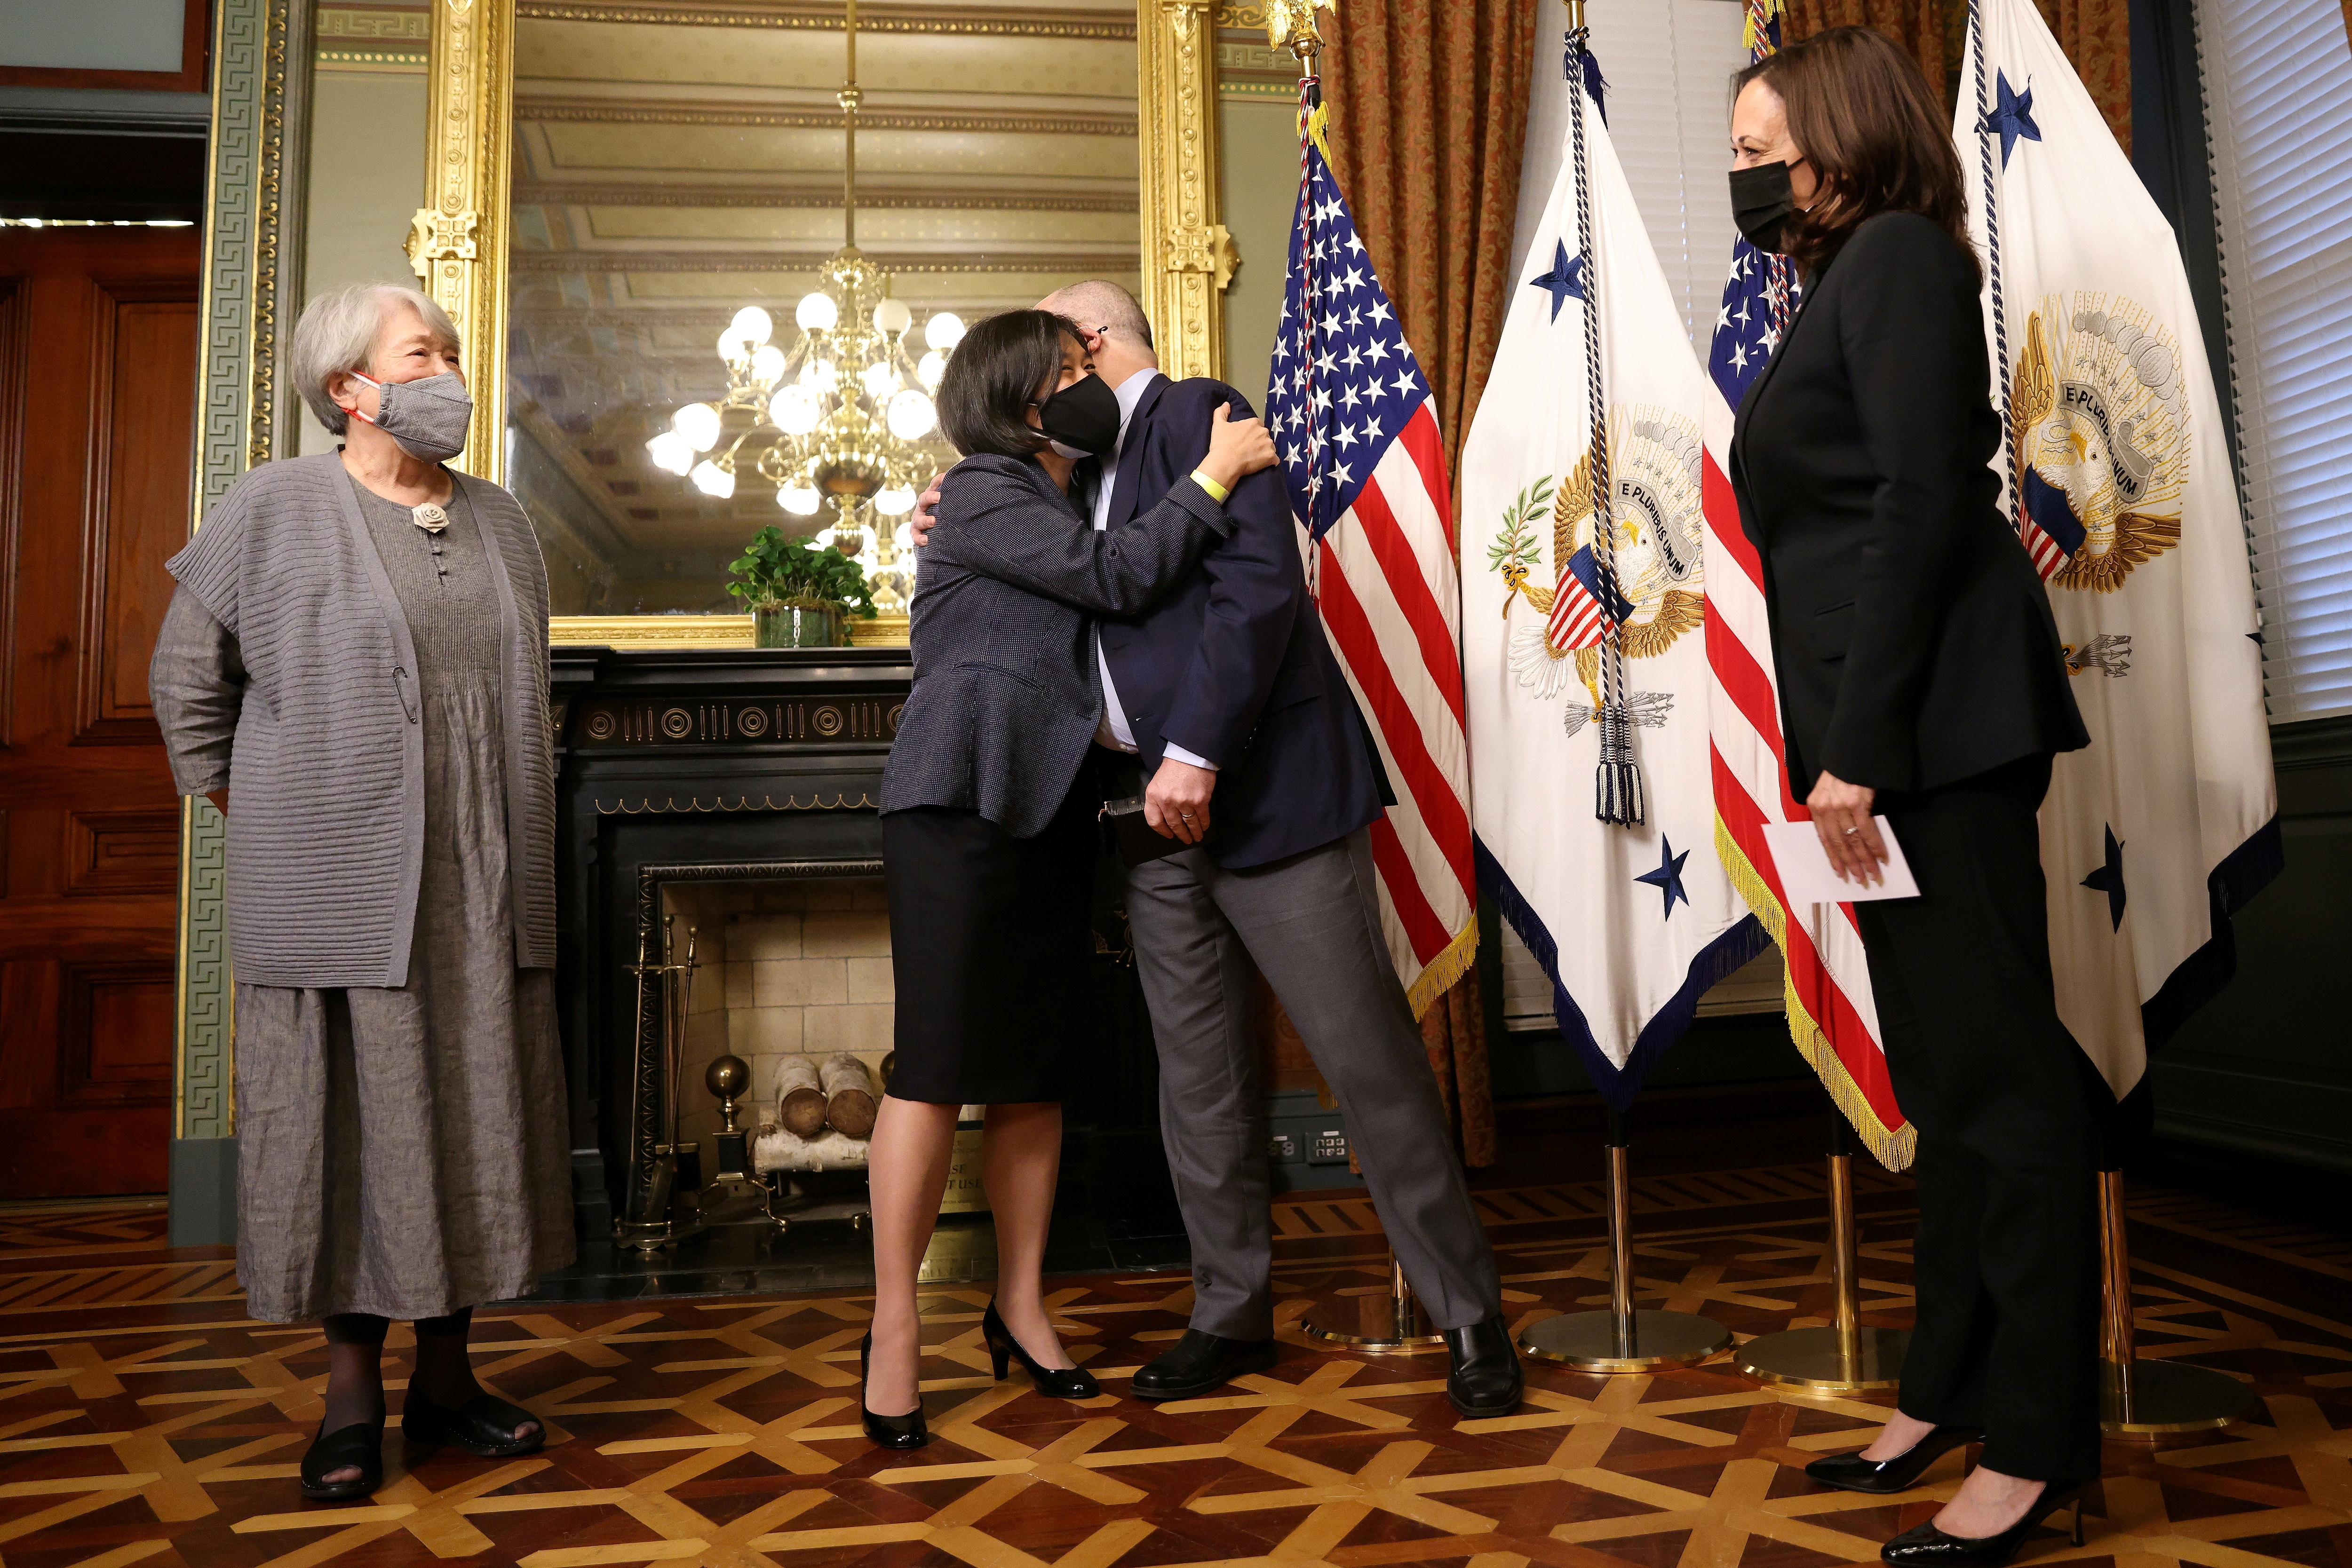 Vice President Kamala Harris ceremonially swears in Trade Representative Katherine Tai at the White House